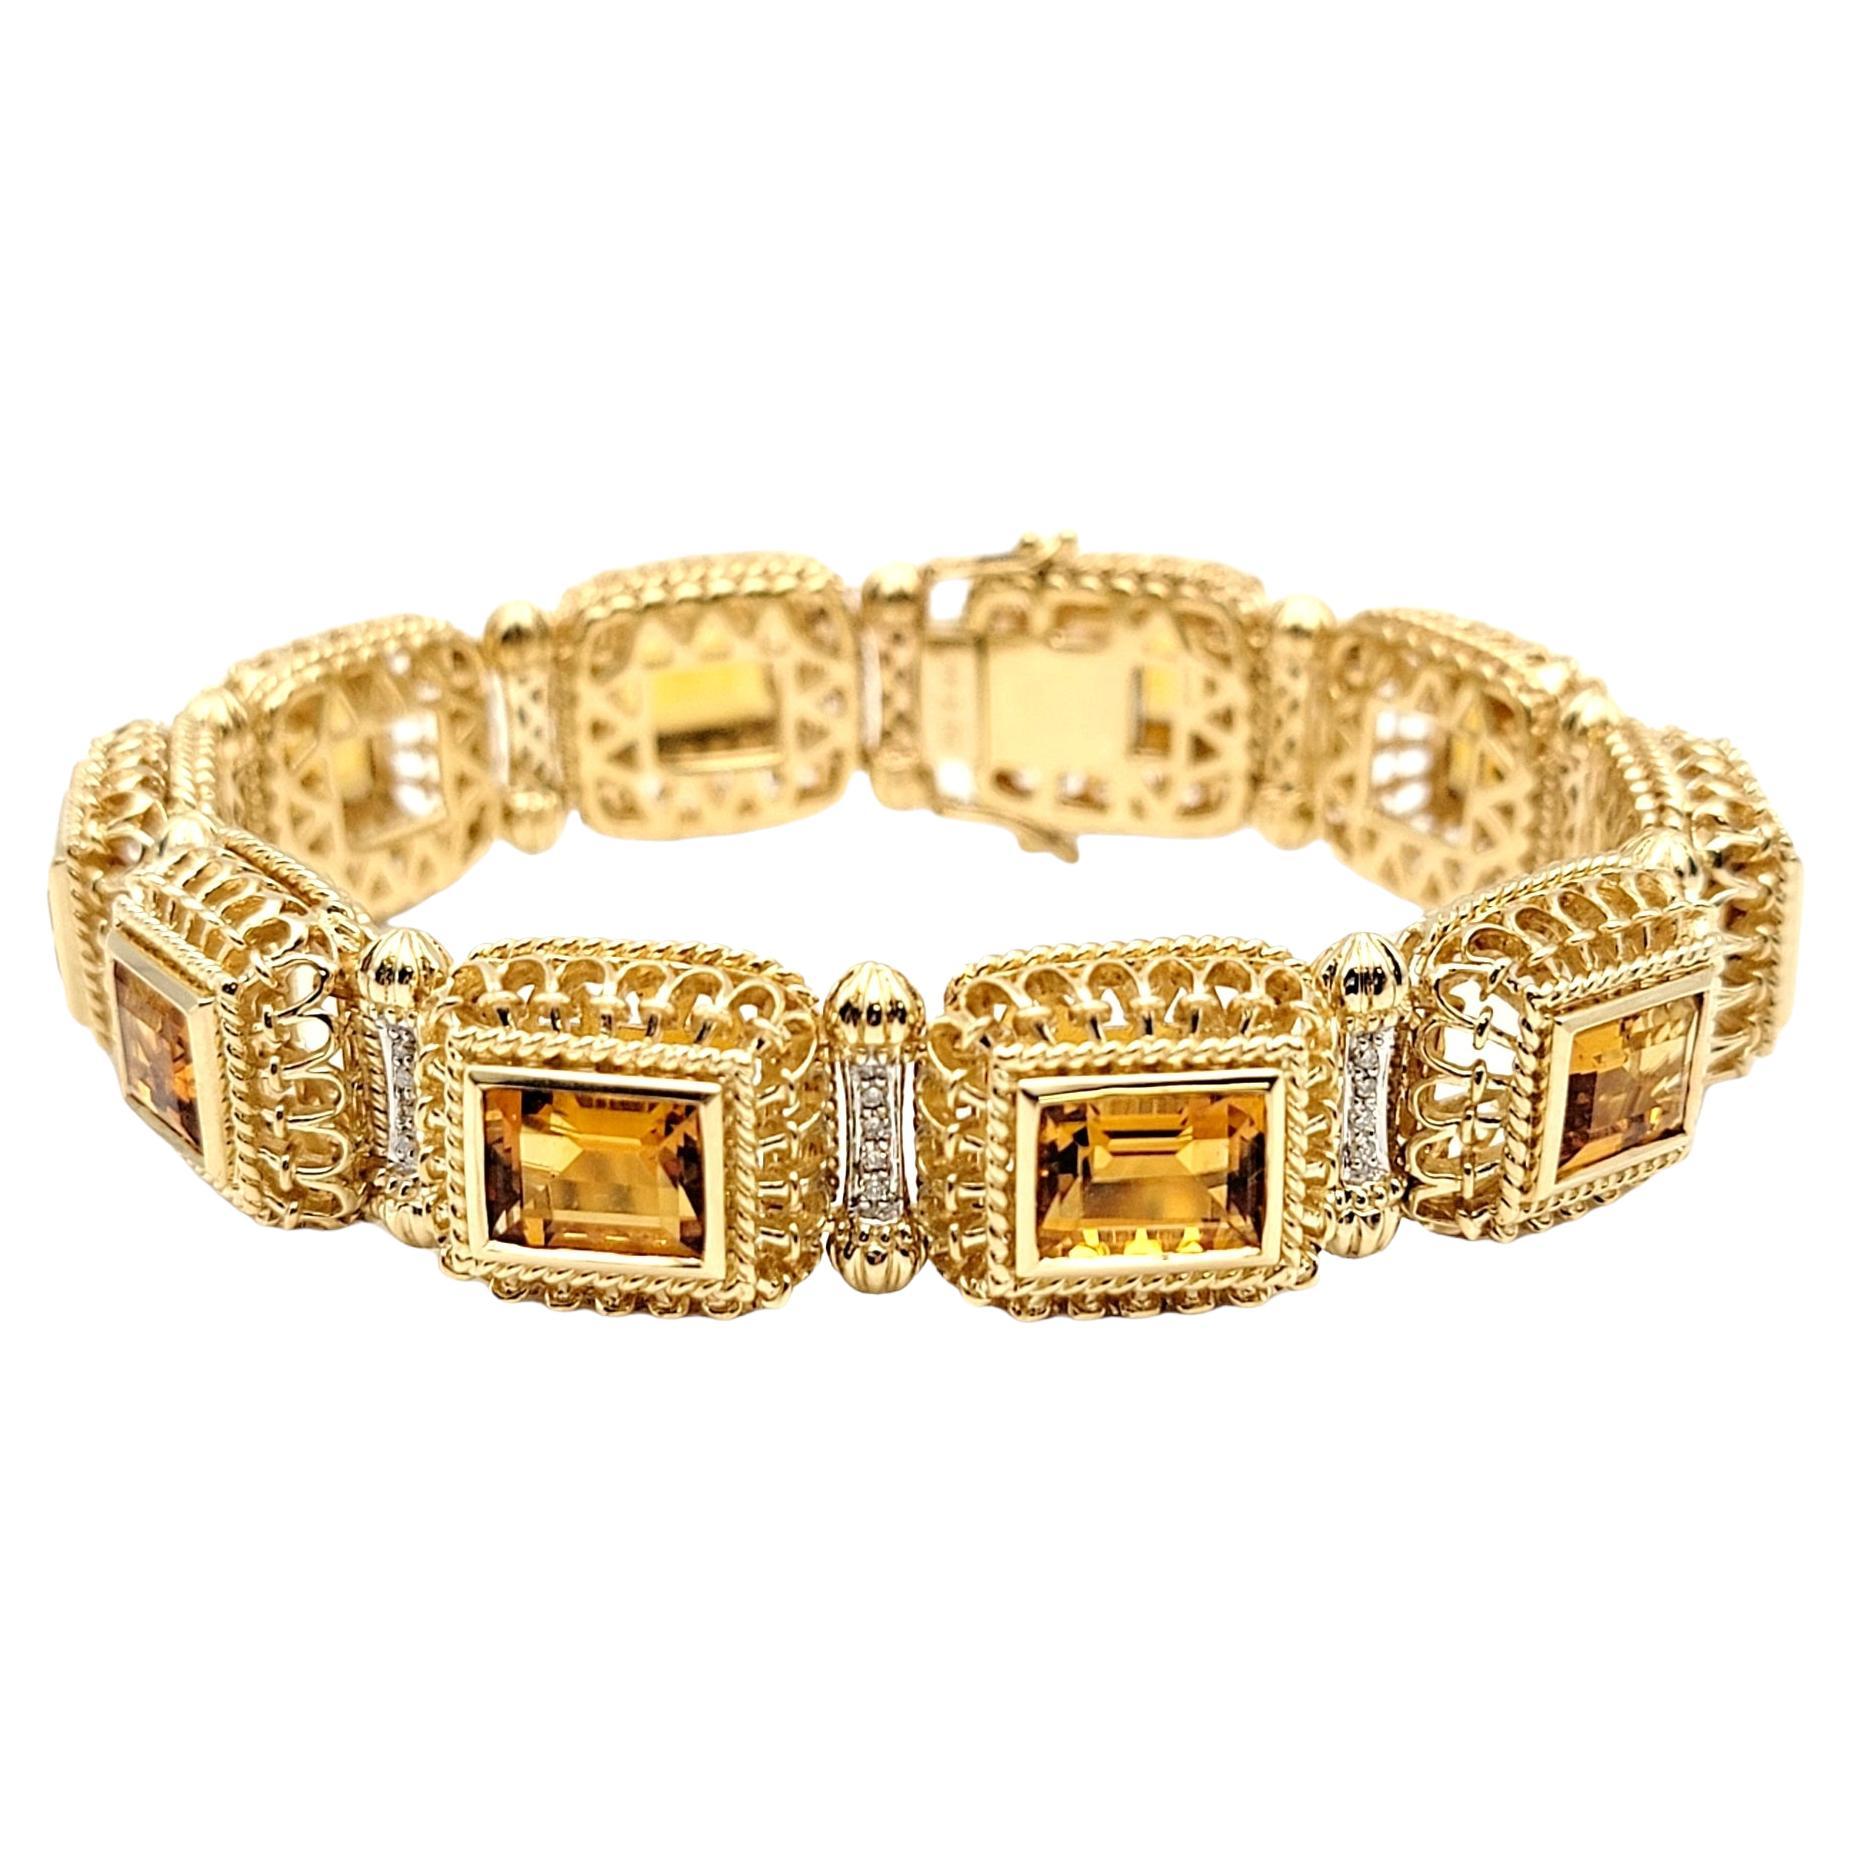 Rectangular Step Cut Citrine and Diamond Ornate Link Bracelet in 14 Karat Gold For Sale